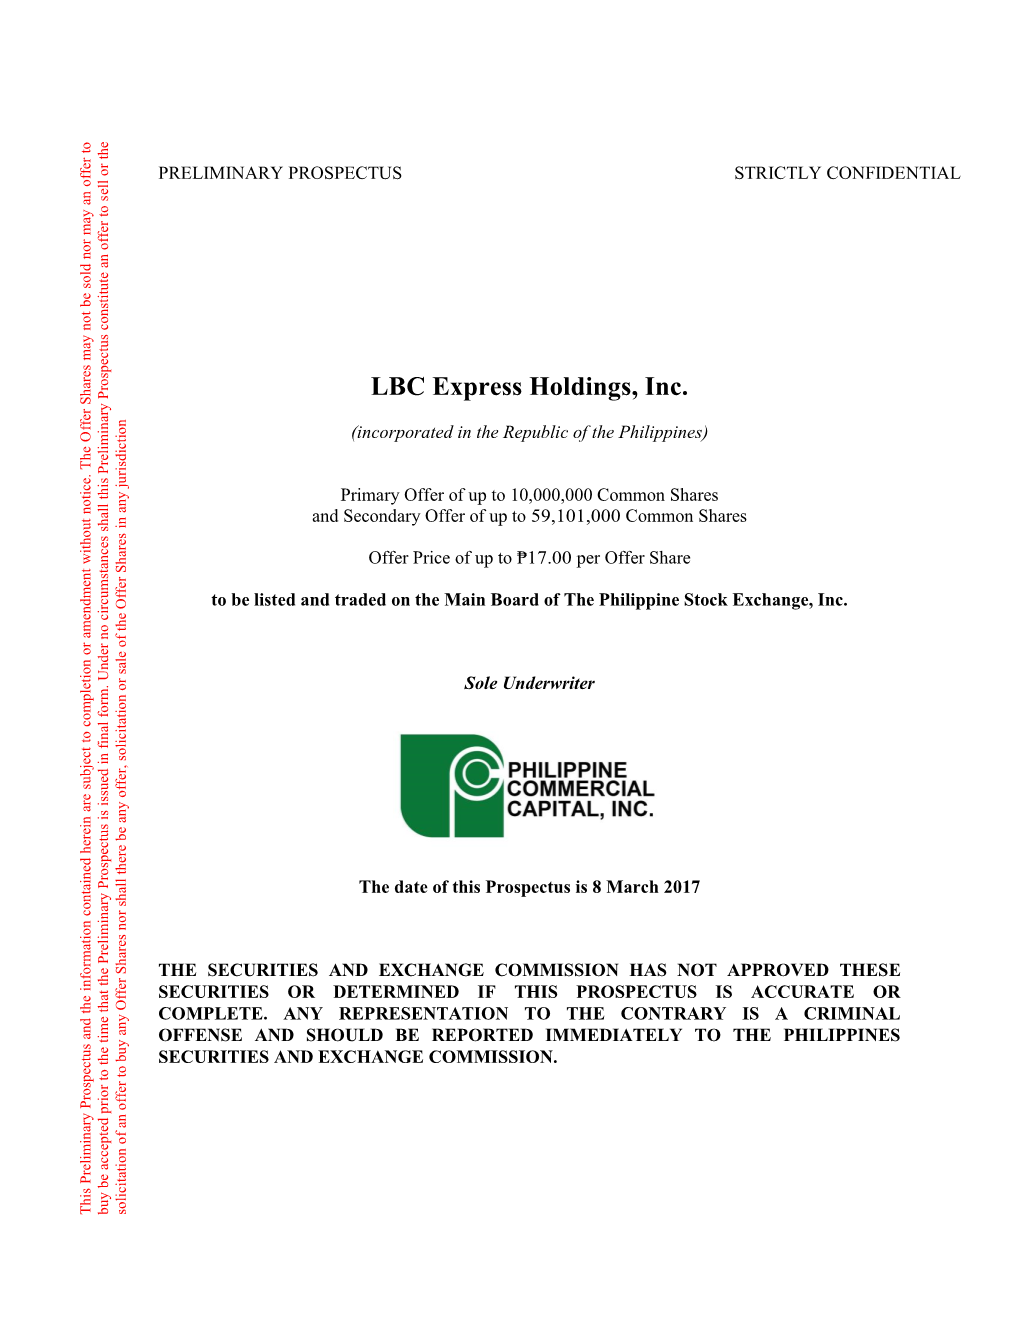 LBC Express Holdings, Inc